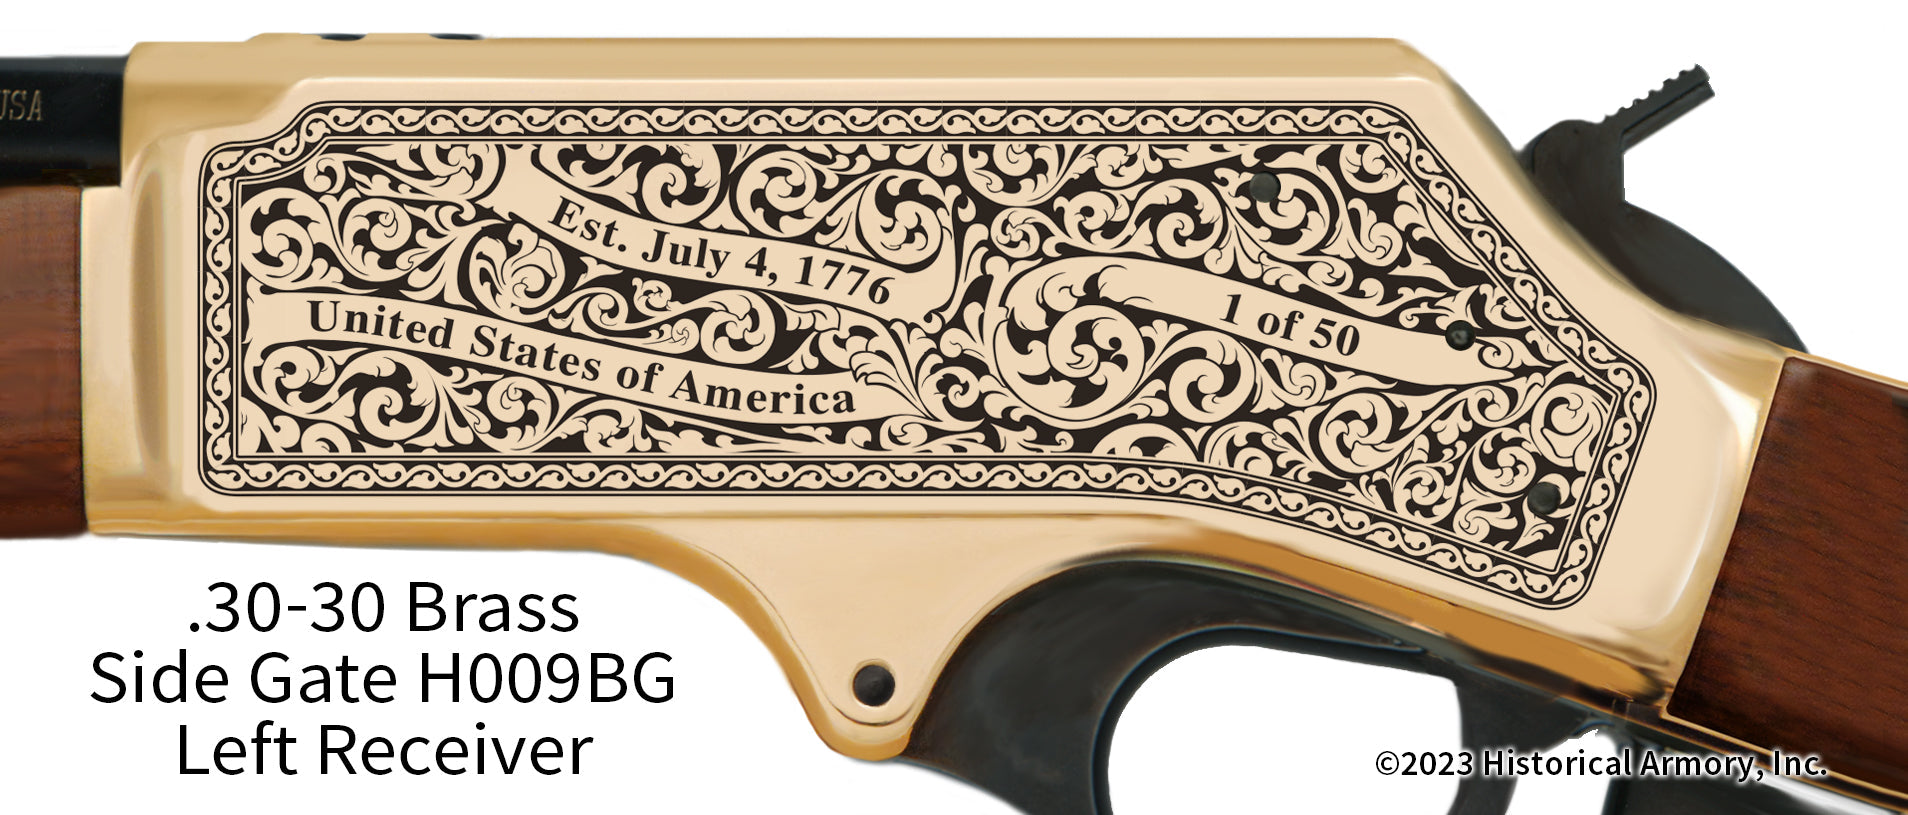 Franklin County Kentucky Engraved Henry .30-30 Brass Side Gate Rifle